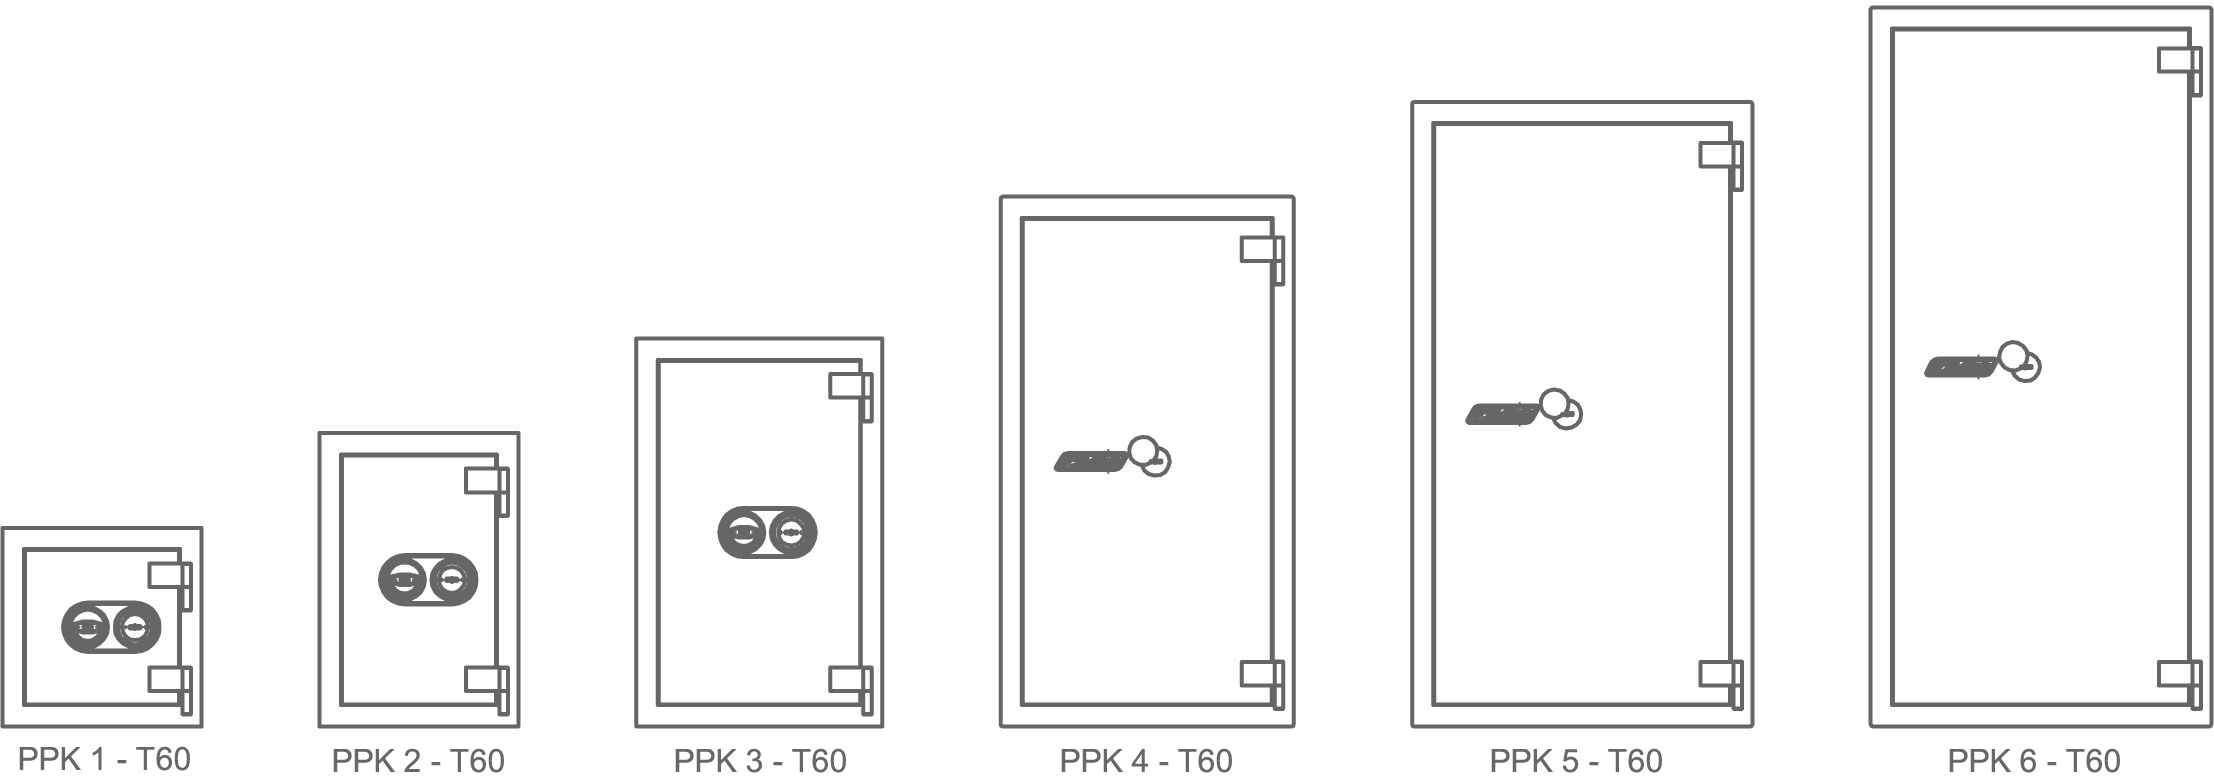 Fireproof Safes - PPK T60 Series Sketches